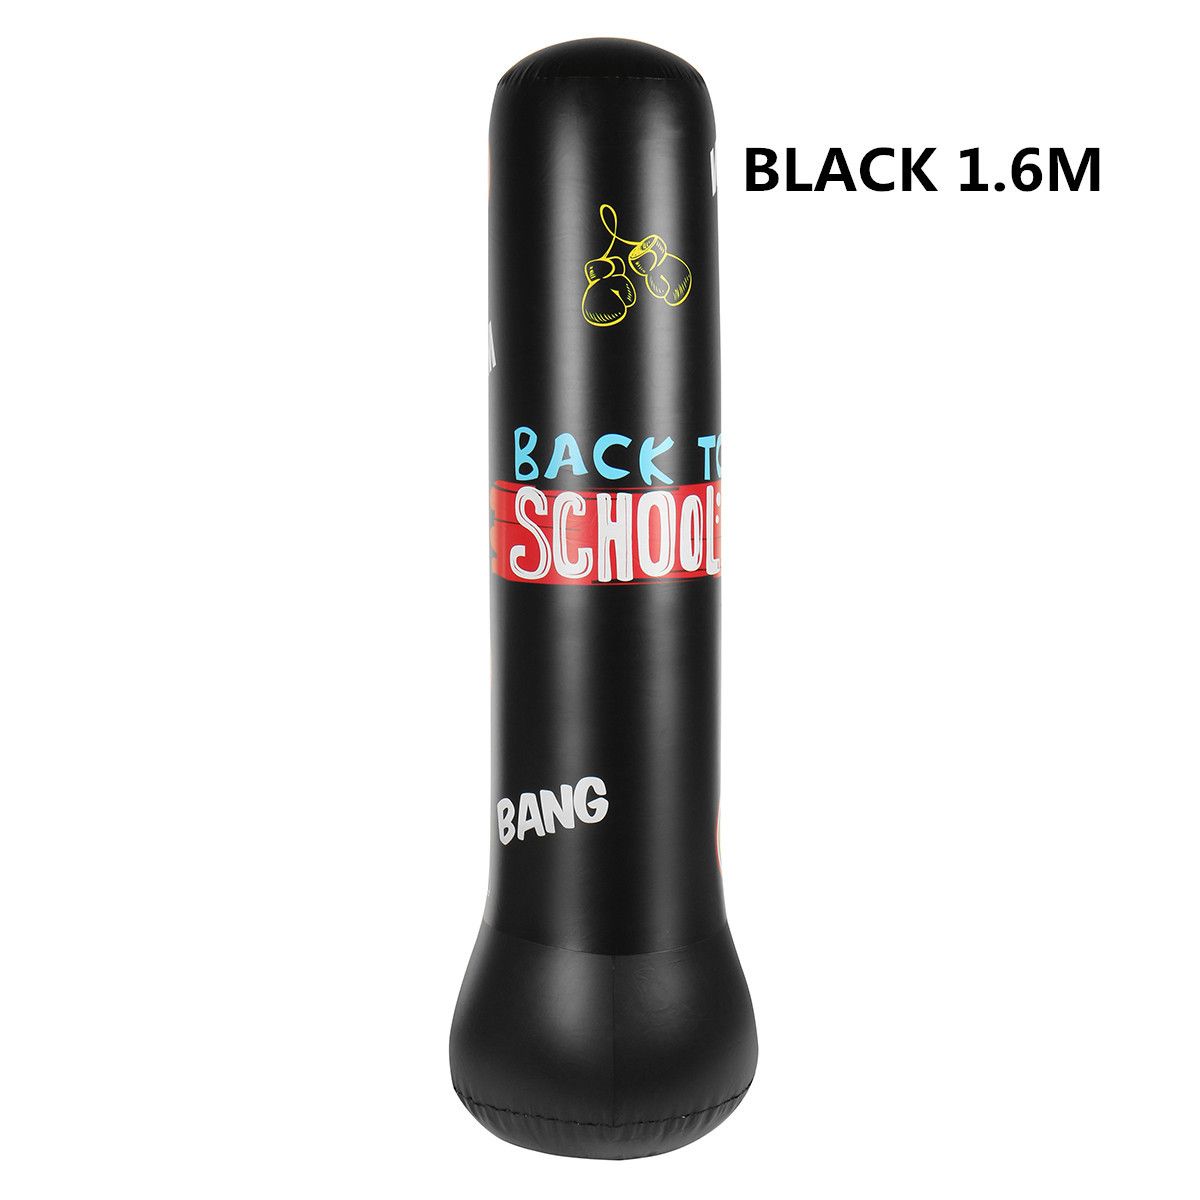 Black 1.6m